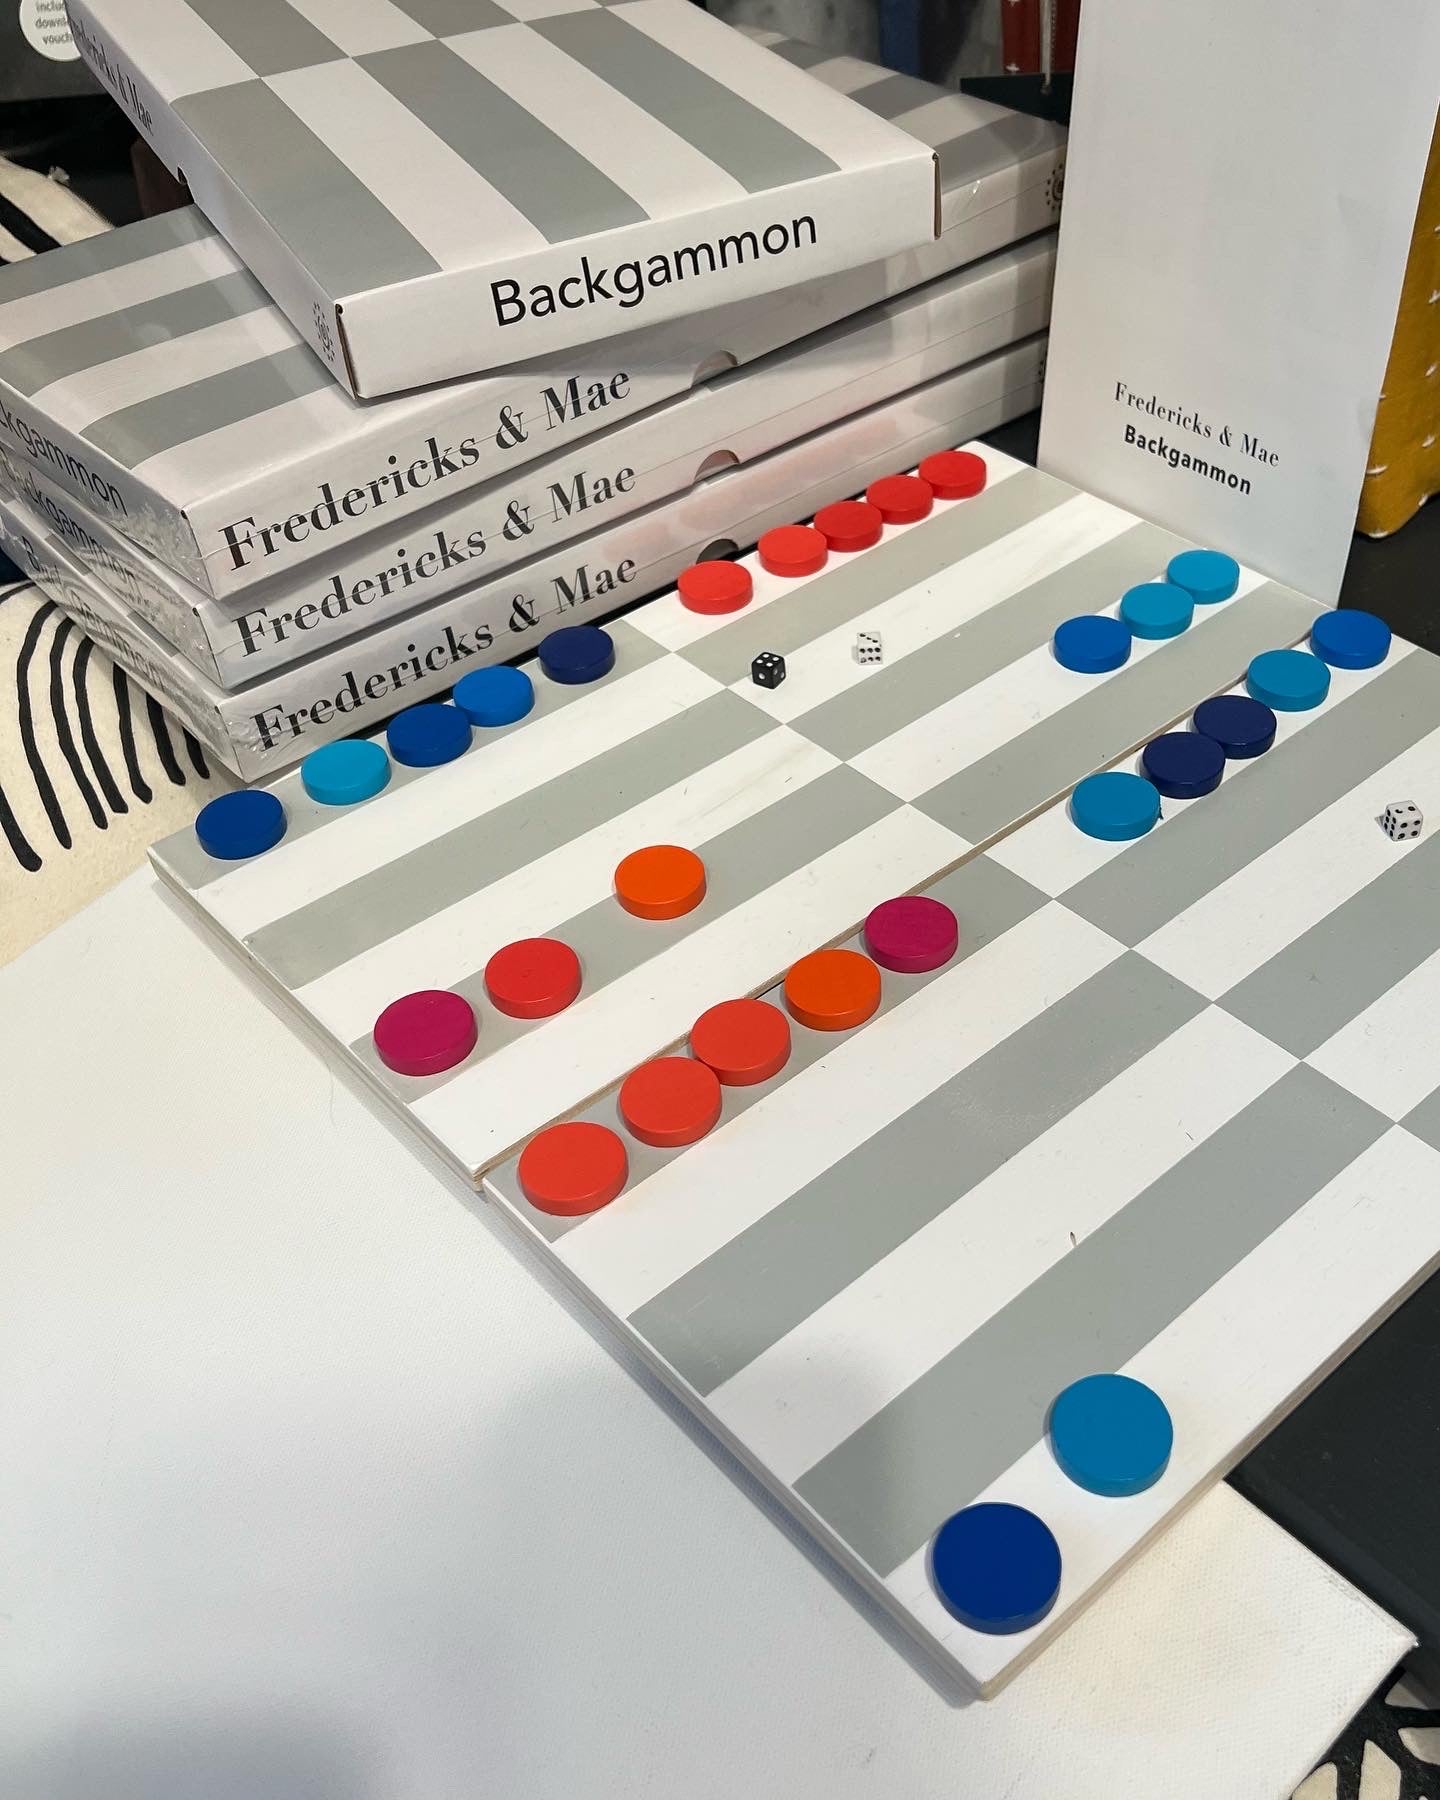 Fredericks & Mae games Backgammon